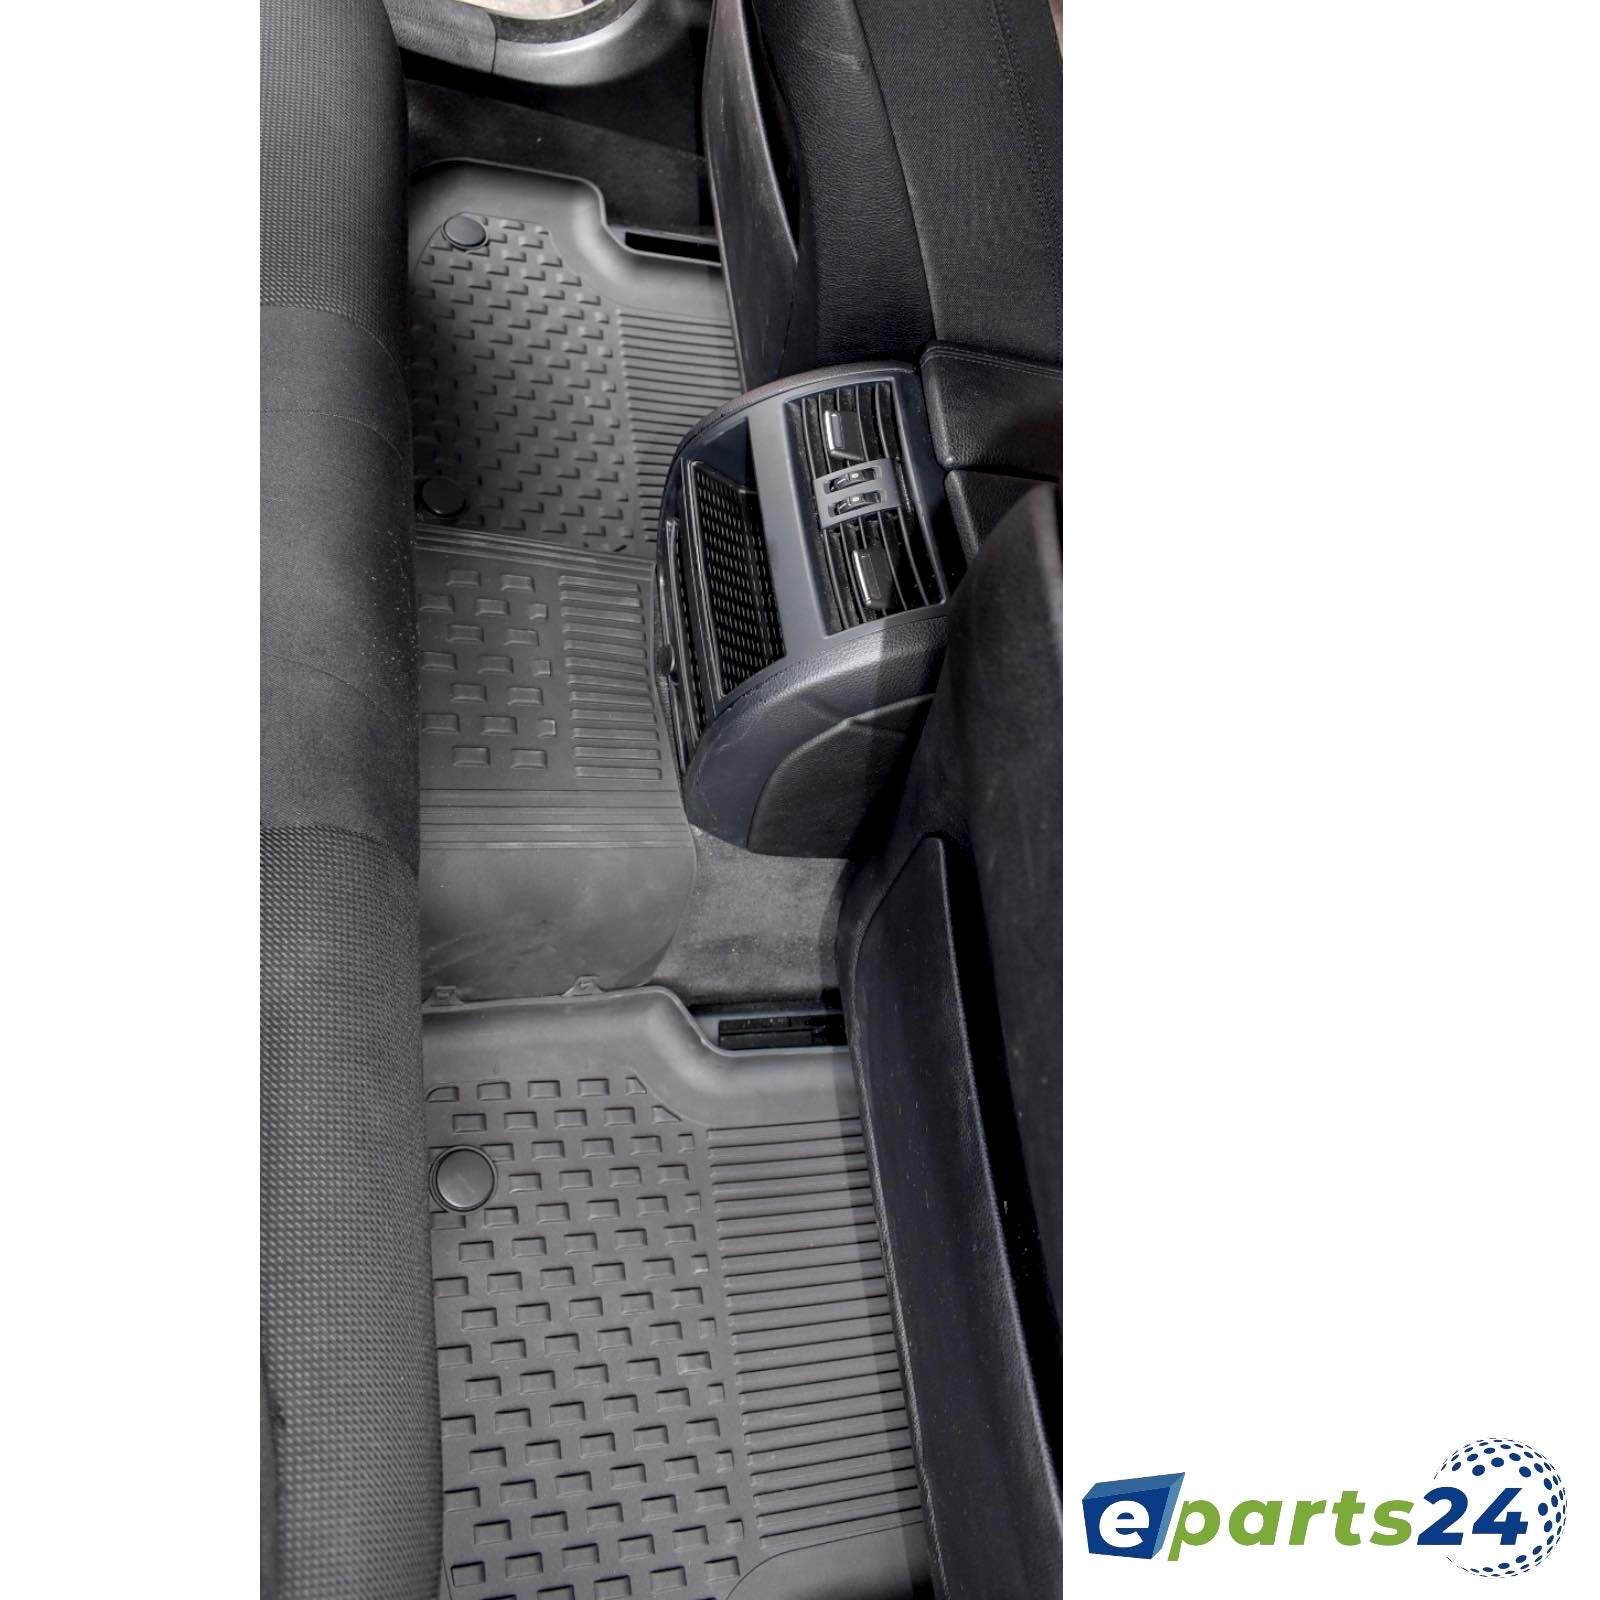 Automatten Fußmatten Premium TPE für F10 Touring 5er BMW Limo – F11 5tlg E-Parts24